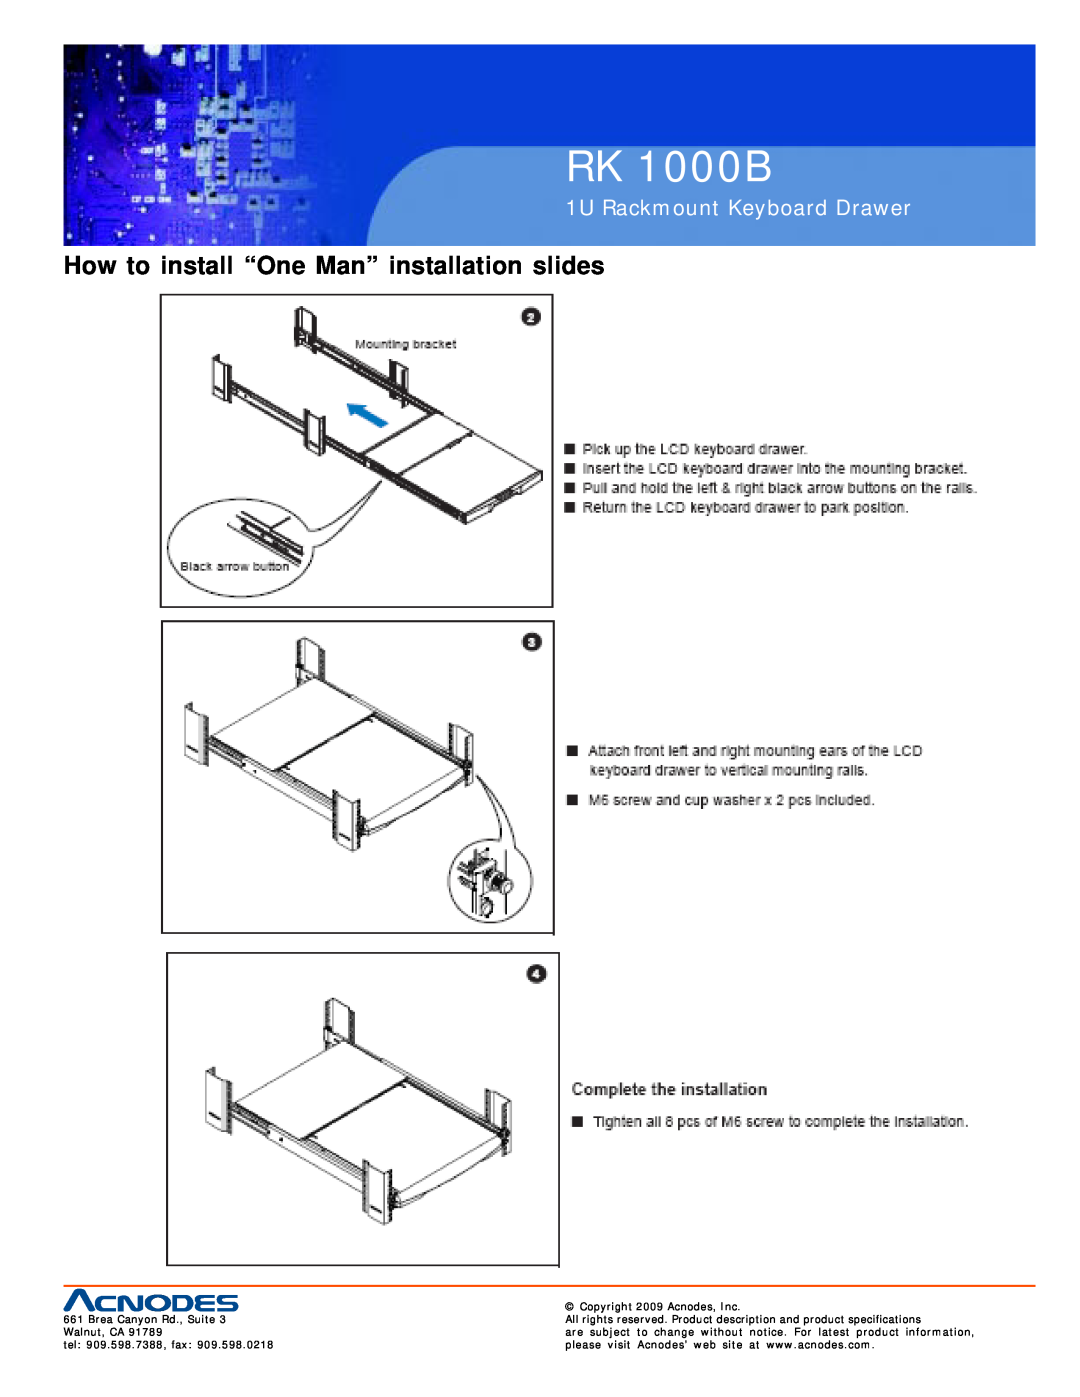 Acnodes RK 1000B How to install “One Man” installation slides, 1U Rackmount Keyboard Drawer, Copyright 2009 Acnodes, Inc 